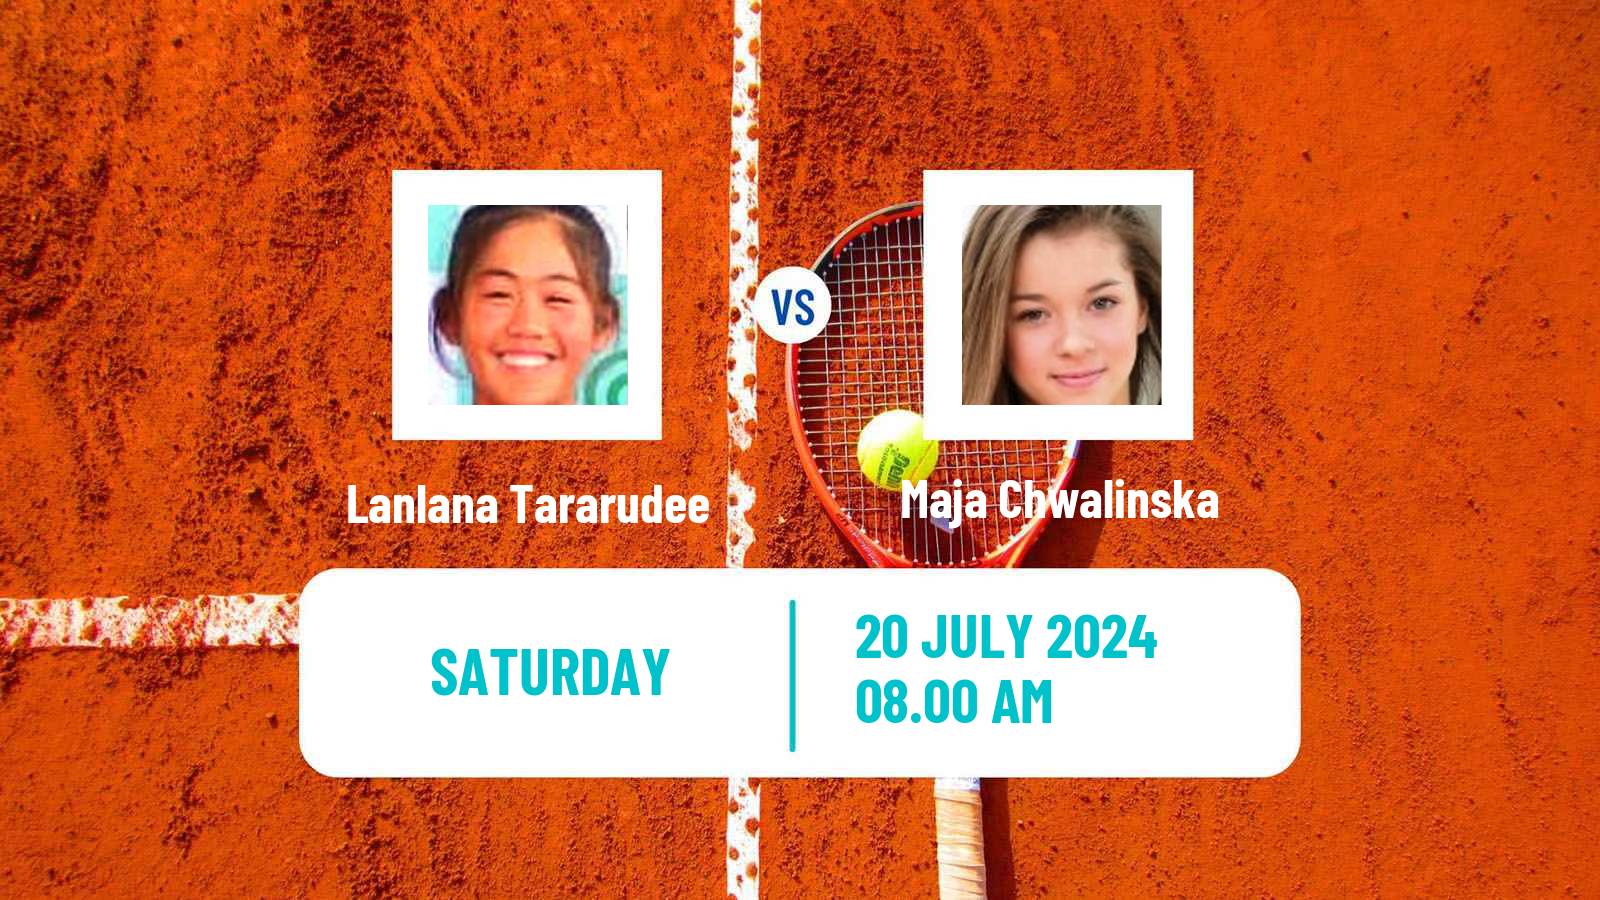 Tennis ITF W75 Porto 2 Women Lanlana Tararudee - Maja Chwalinska